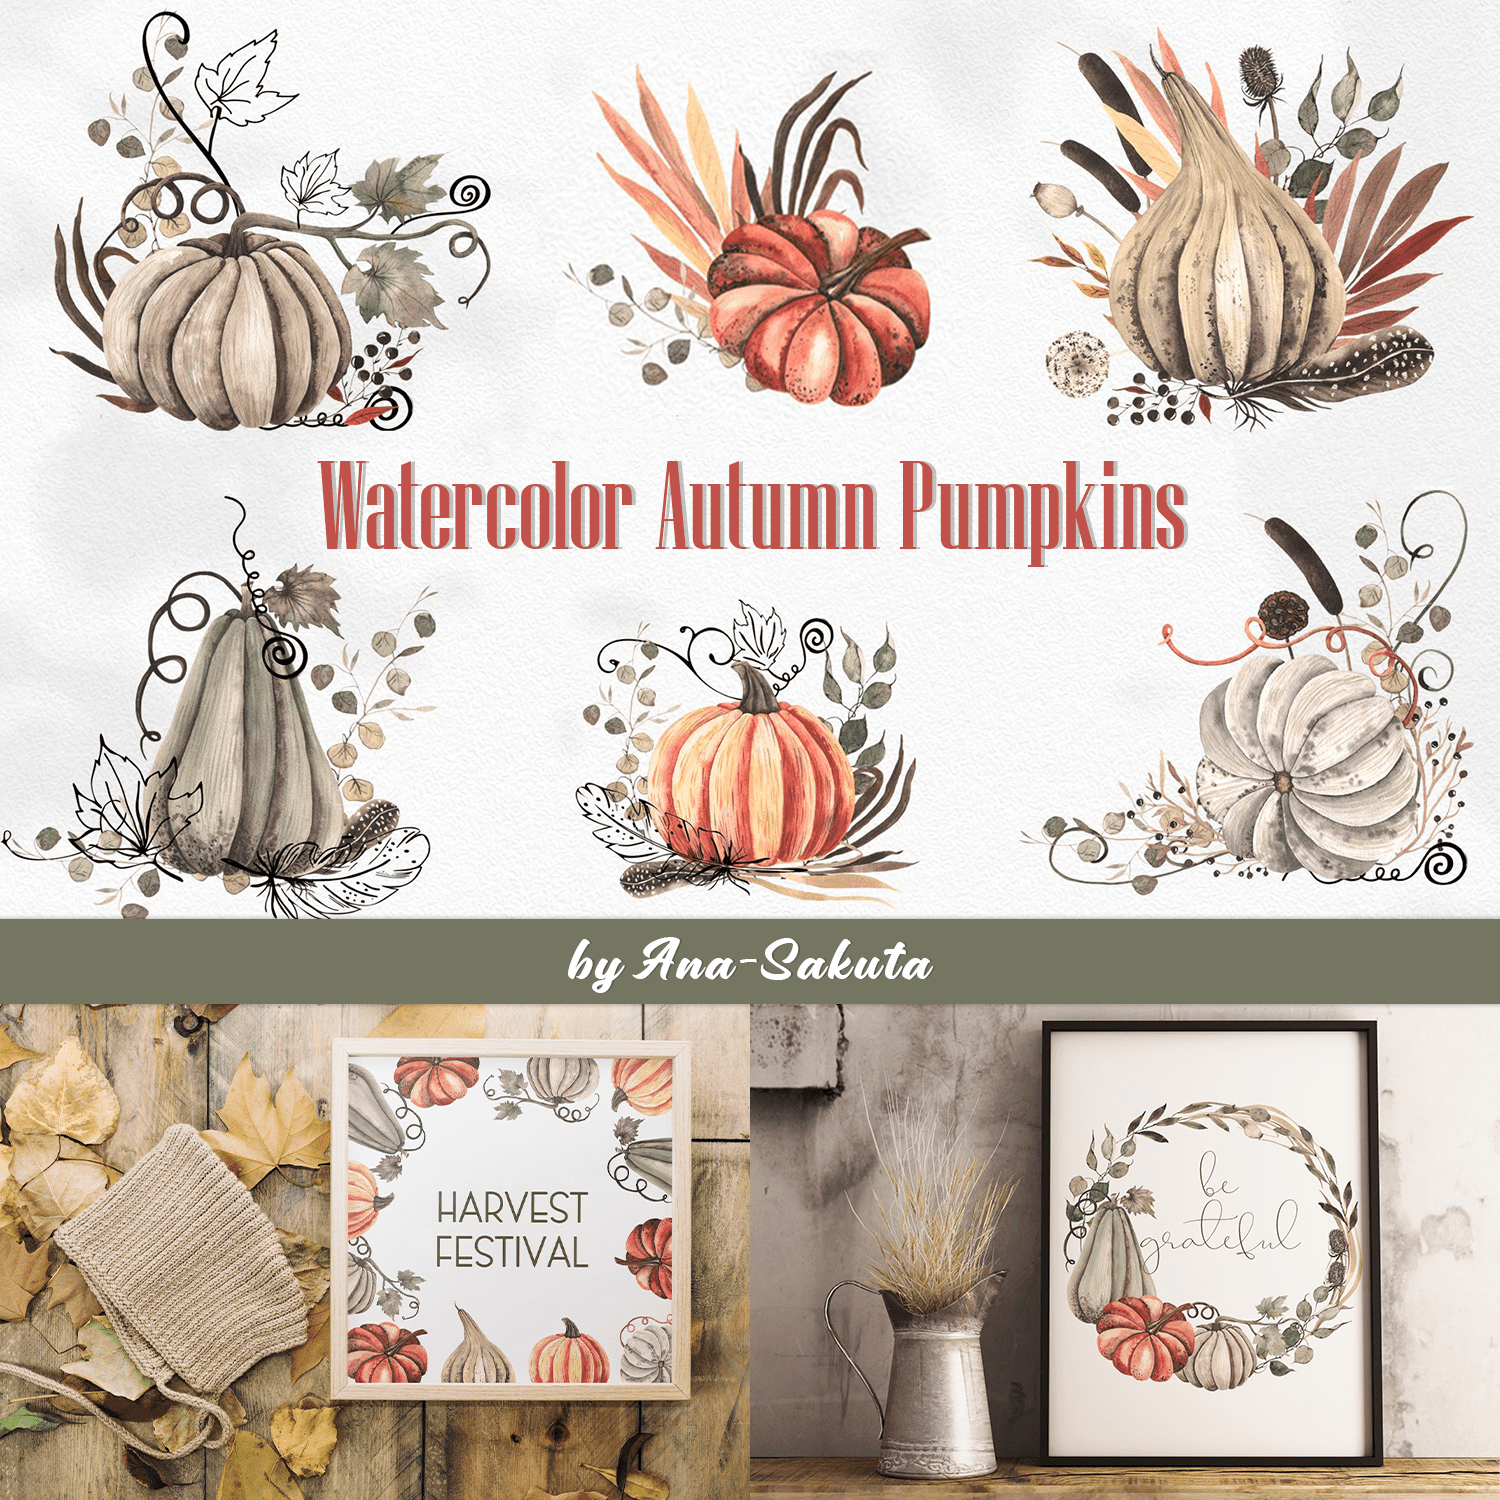 Watercolor Autumn Pumpkins cover.